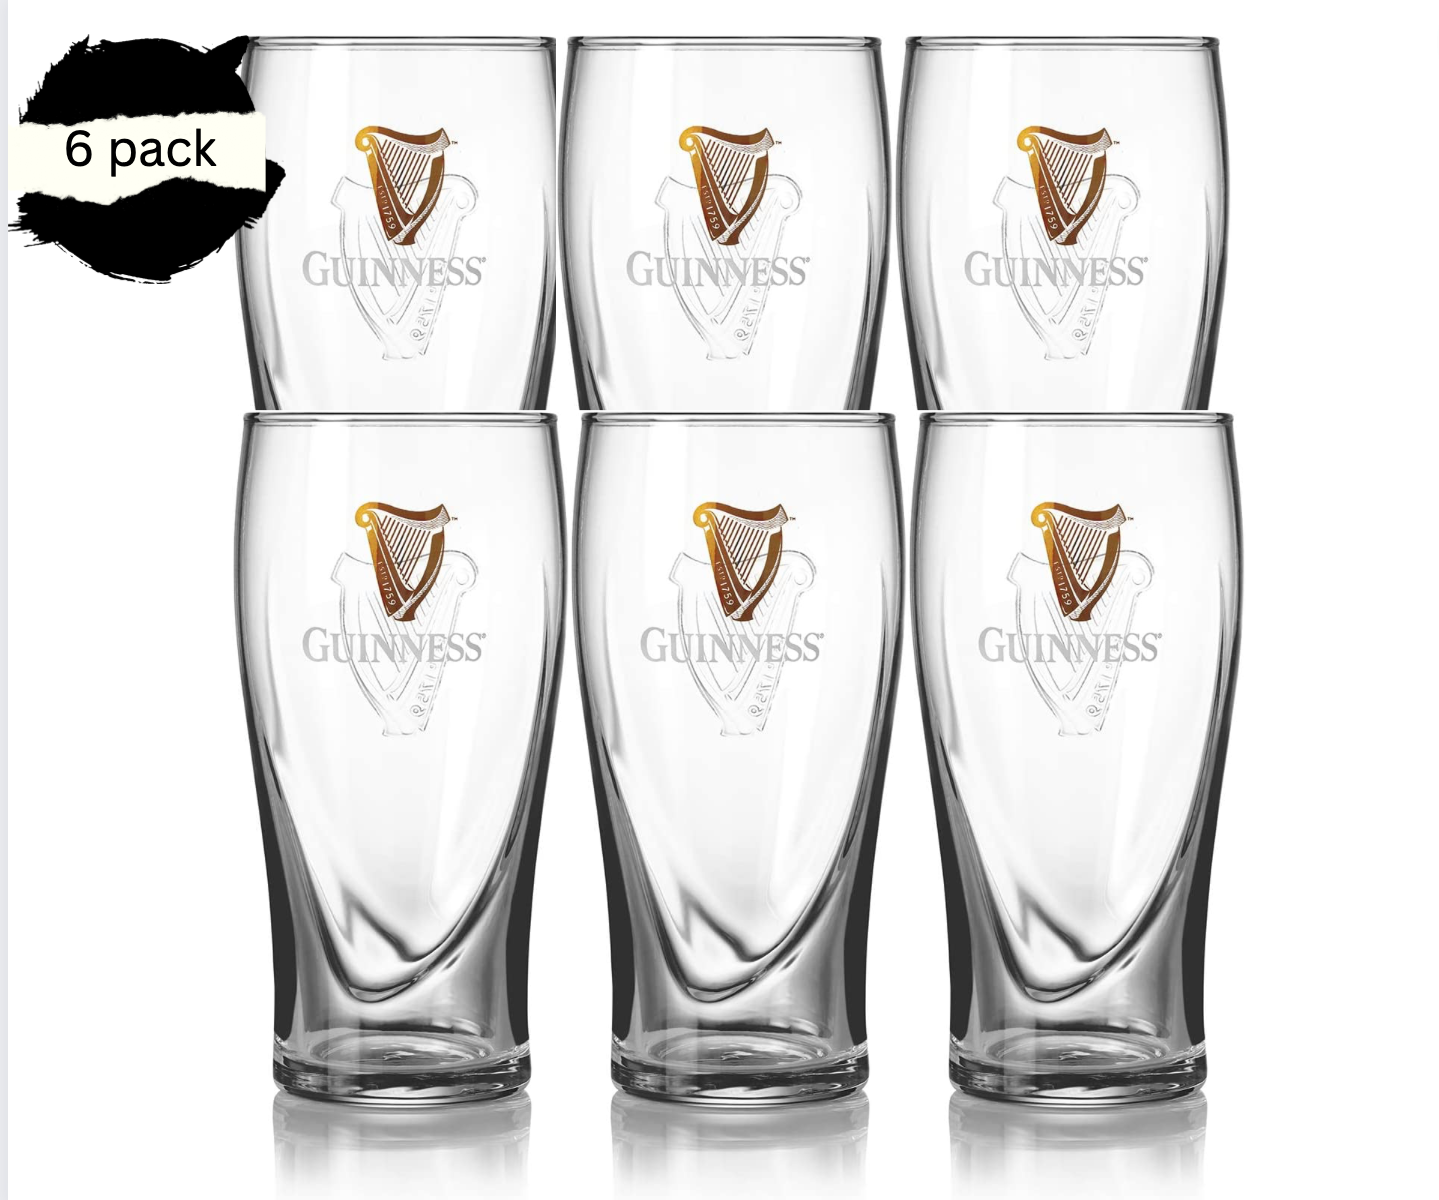  Guinness Gravity Official Beer Pint Glass